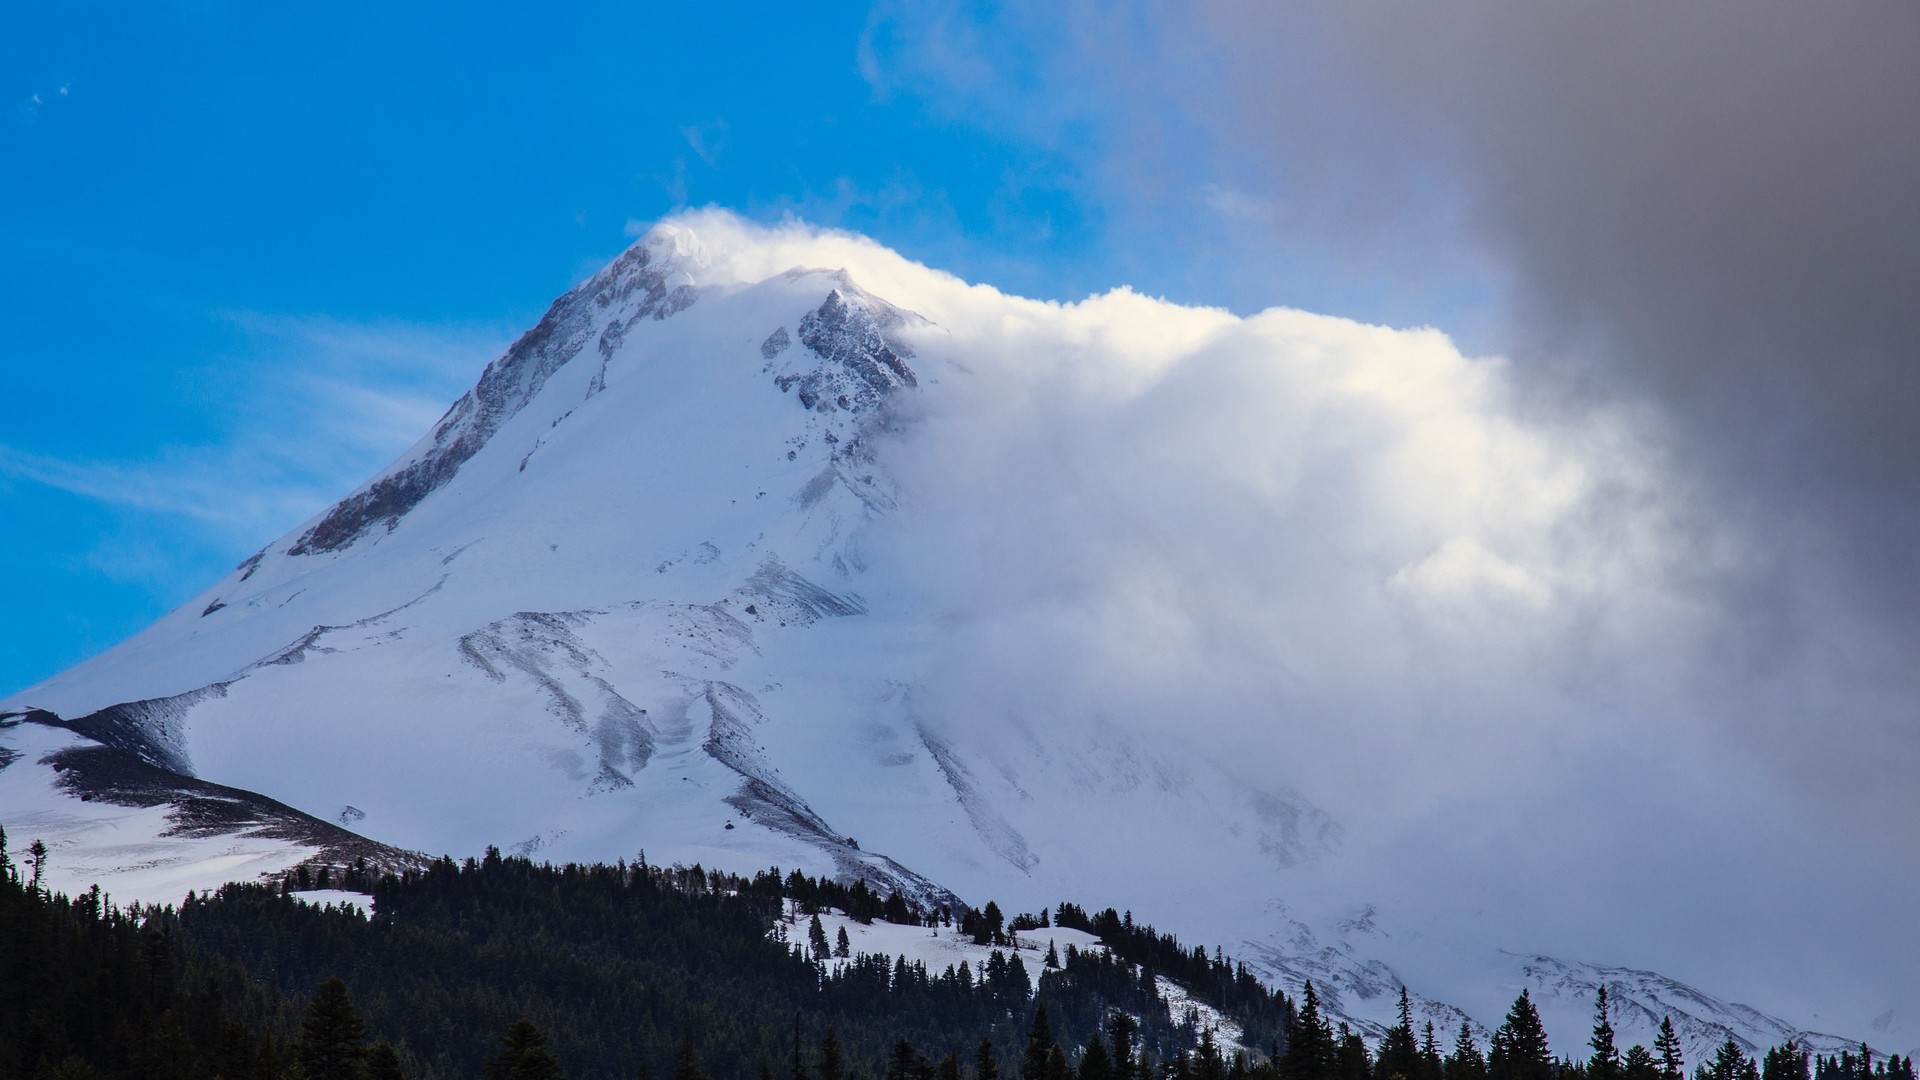 1920x1080 wallpapers: mountains, snow, peak, fog (image)